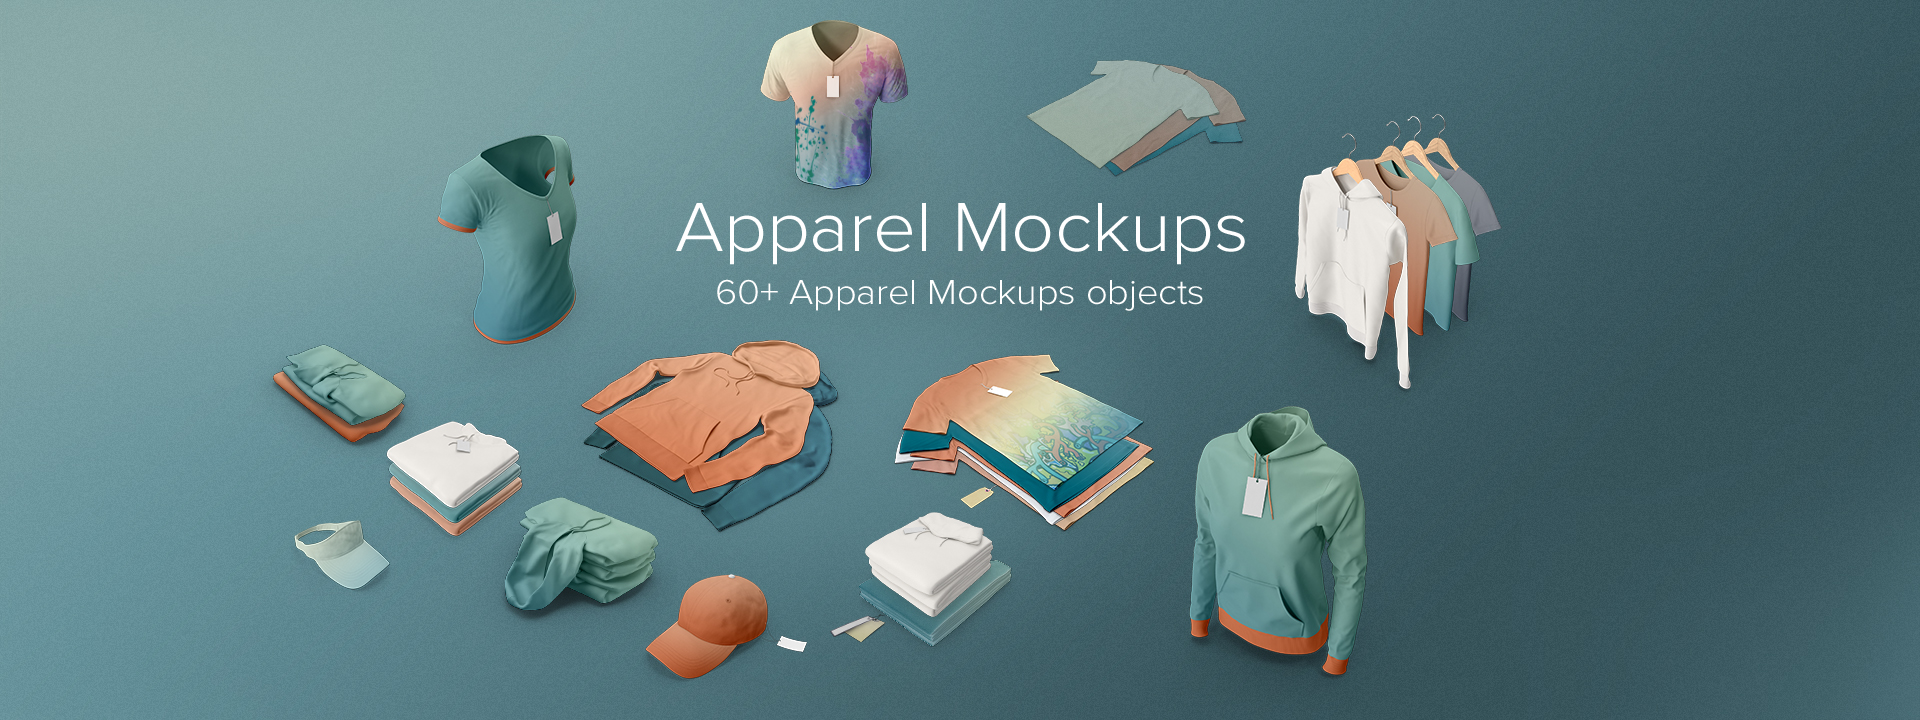 Download Apparel Mockups Collection PNG Images & PSDs for Download | PixelSquid